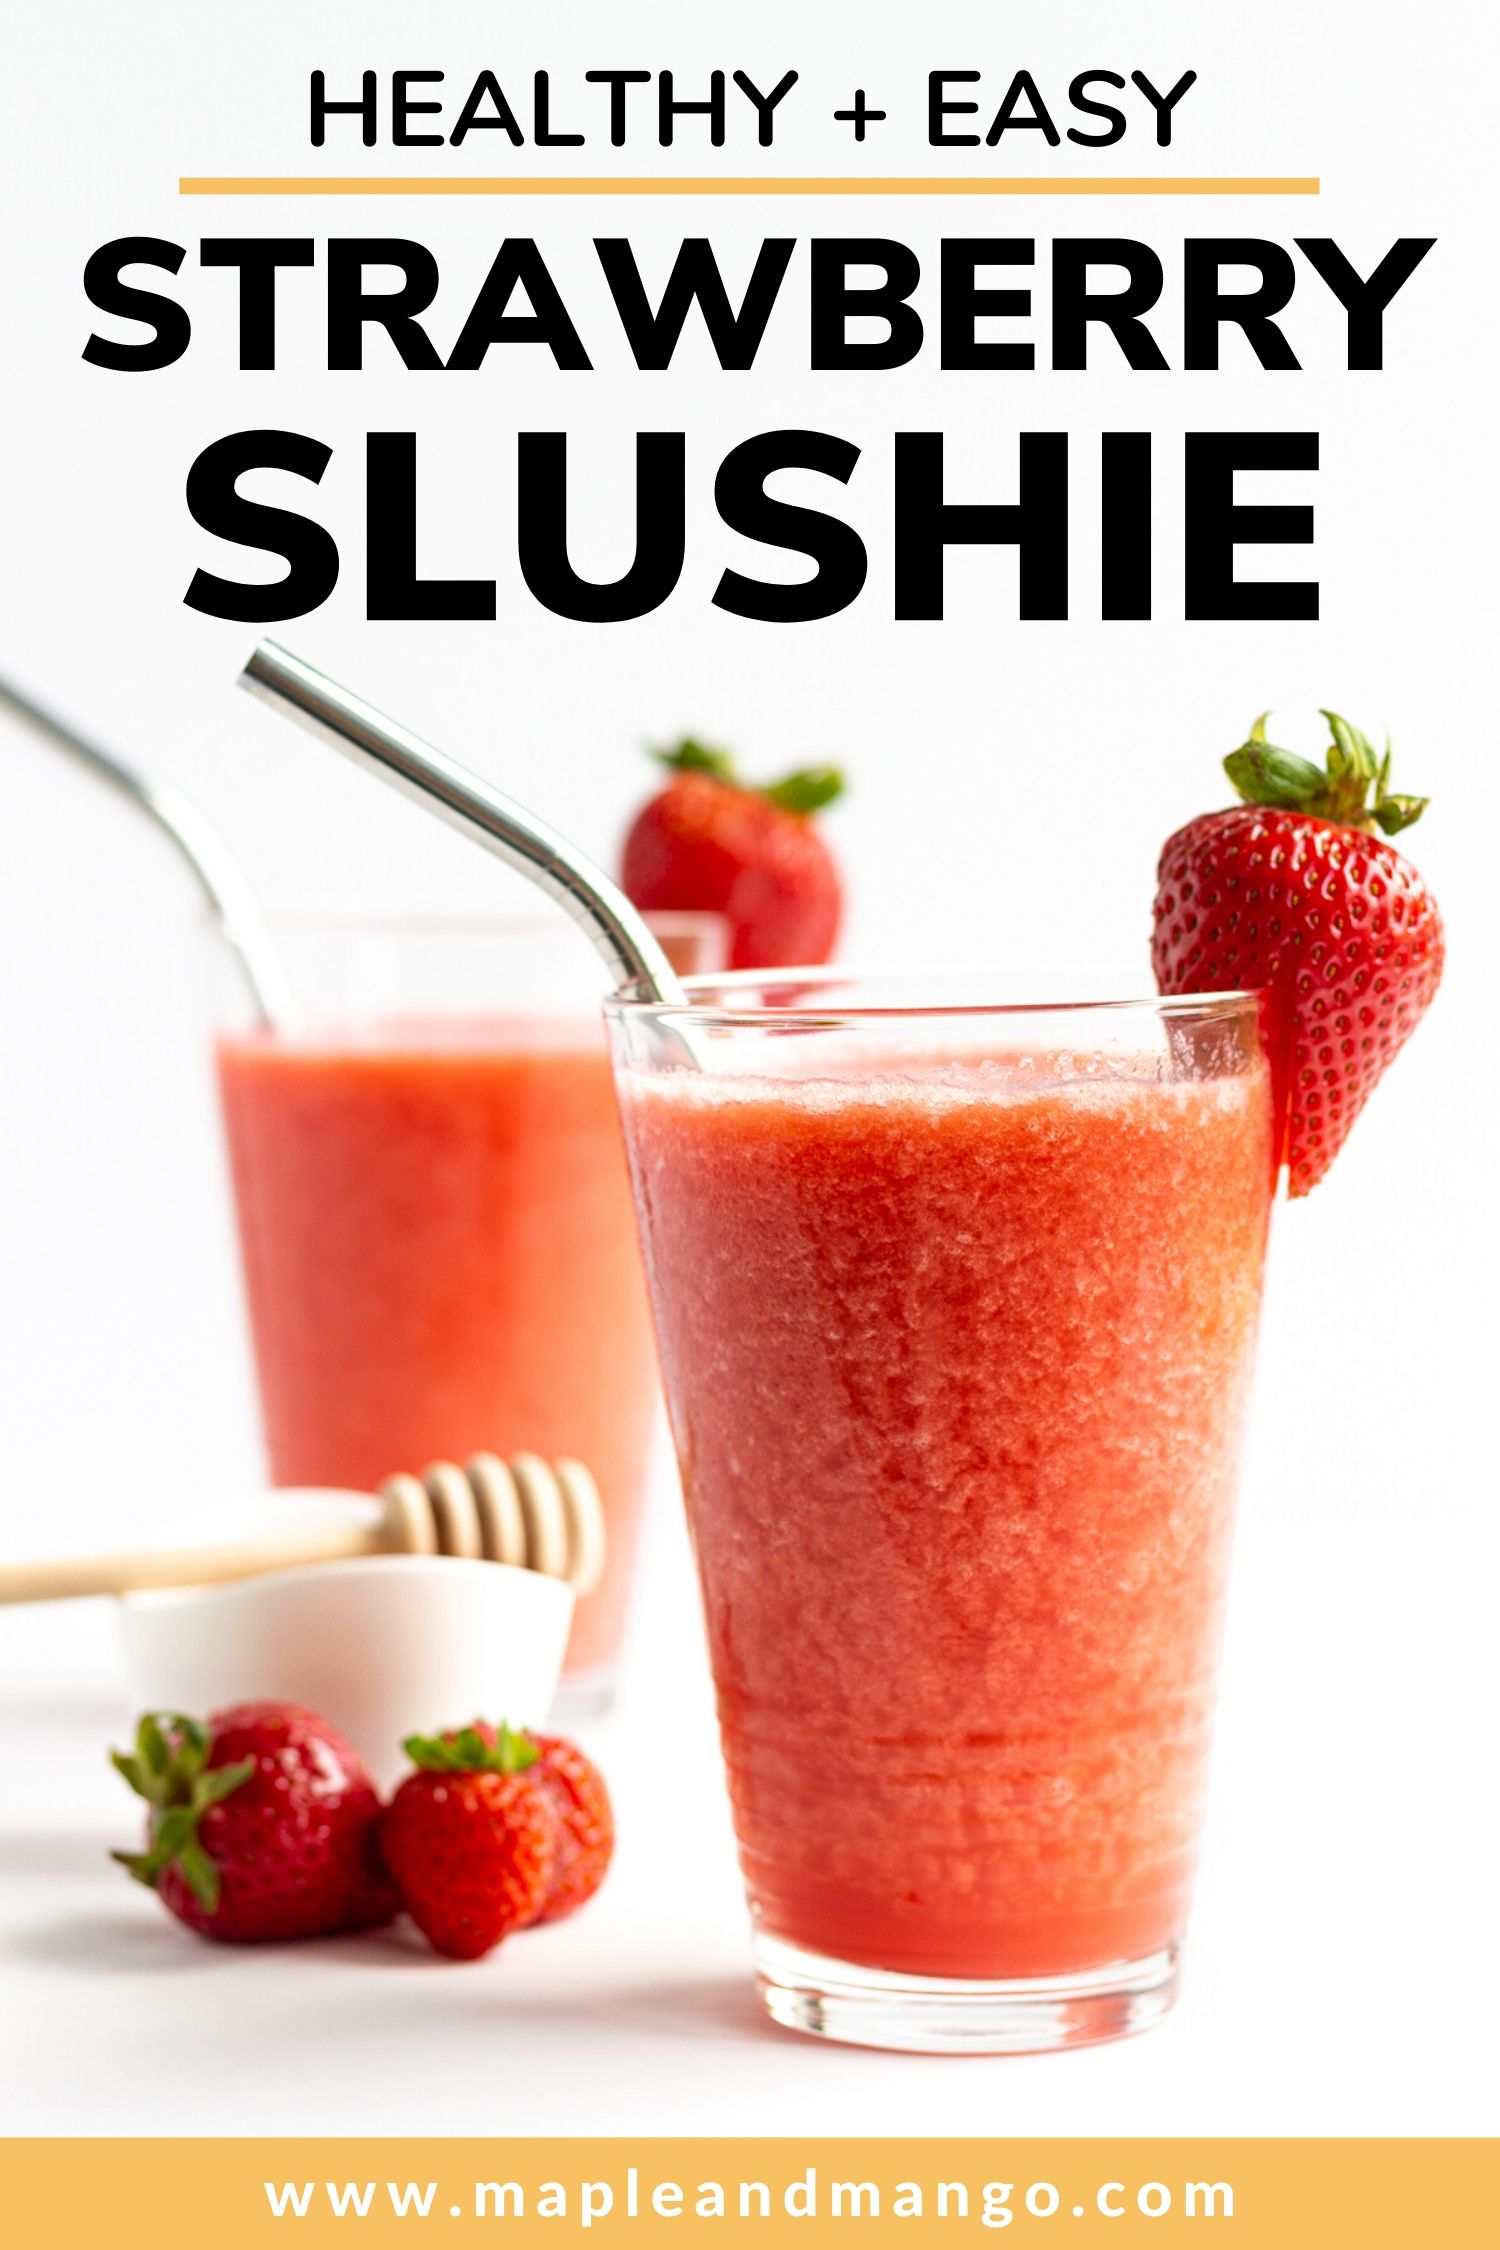 Two glasses of strawberry slushie with text overlay "Healthy + Easy Strawberry Slushie".